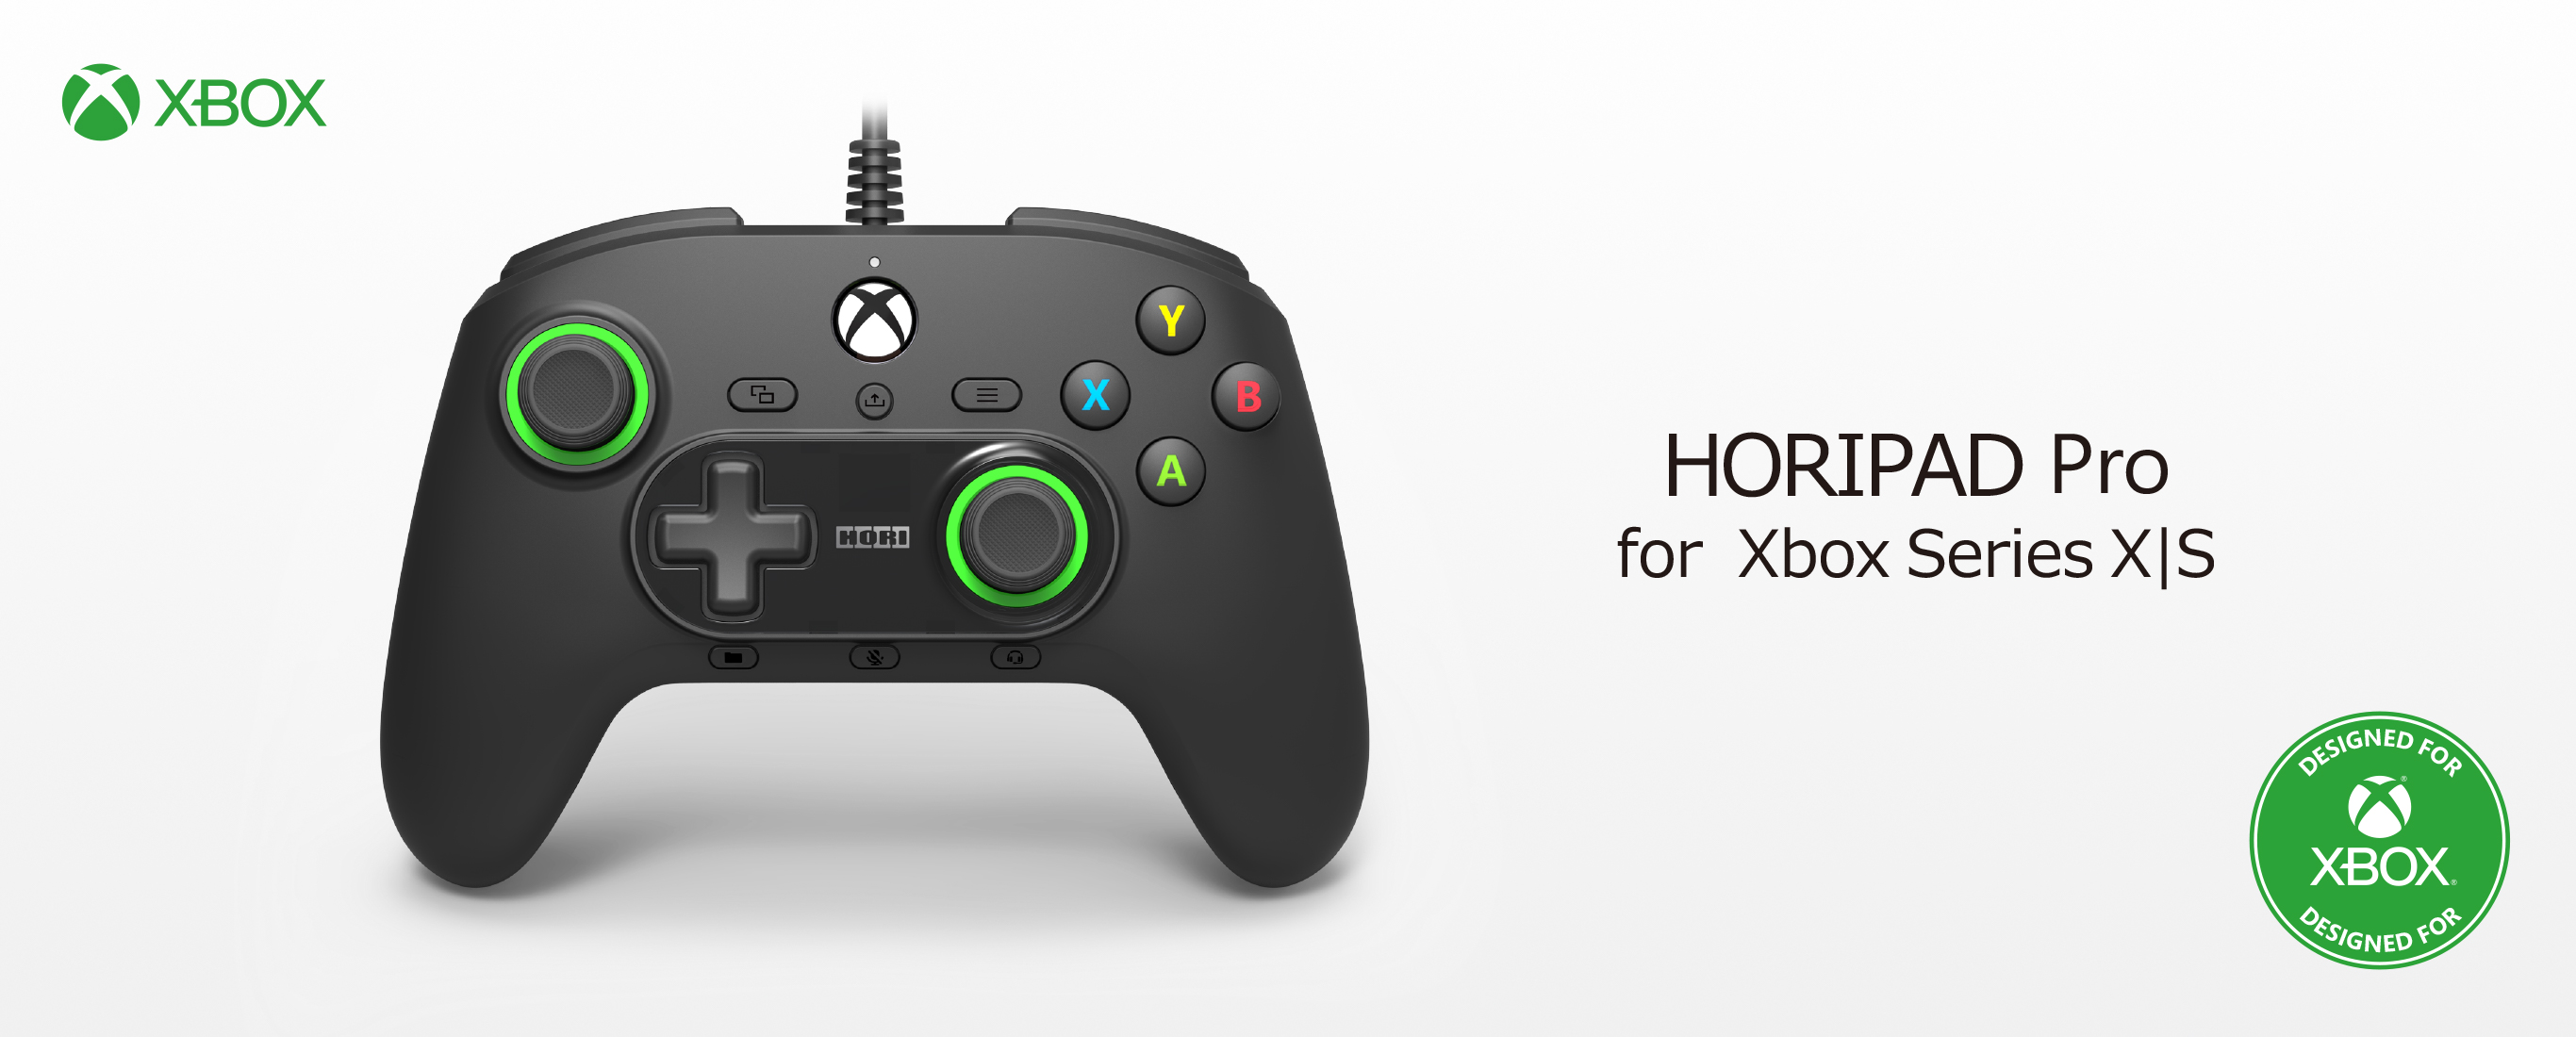 株式会社 HORI HORIPAD Pro for Xbox Series X|S